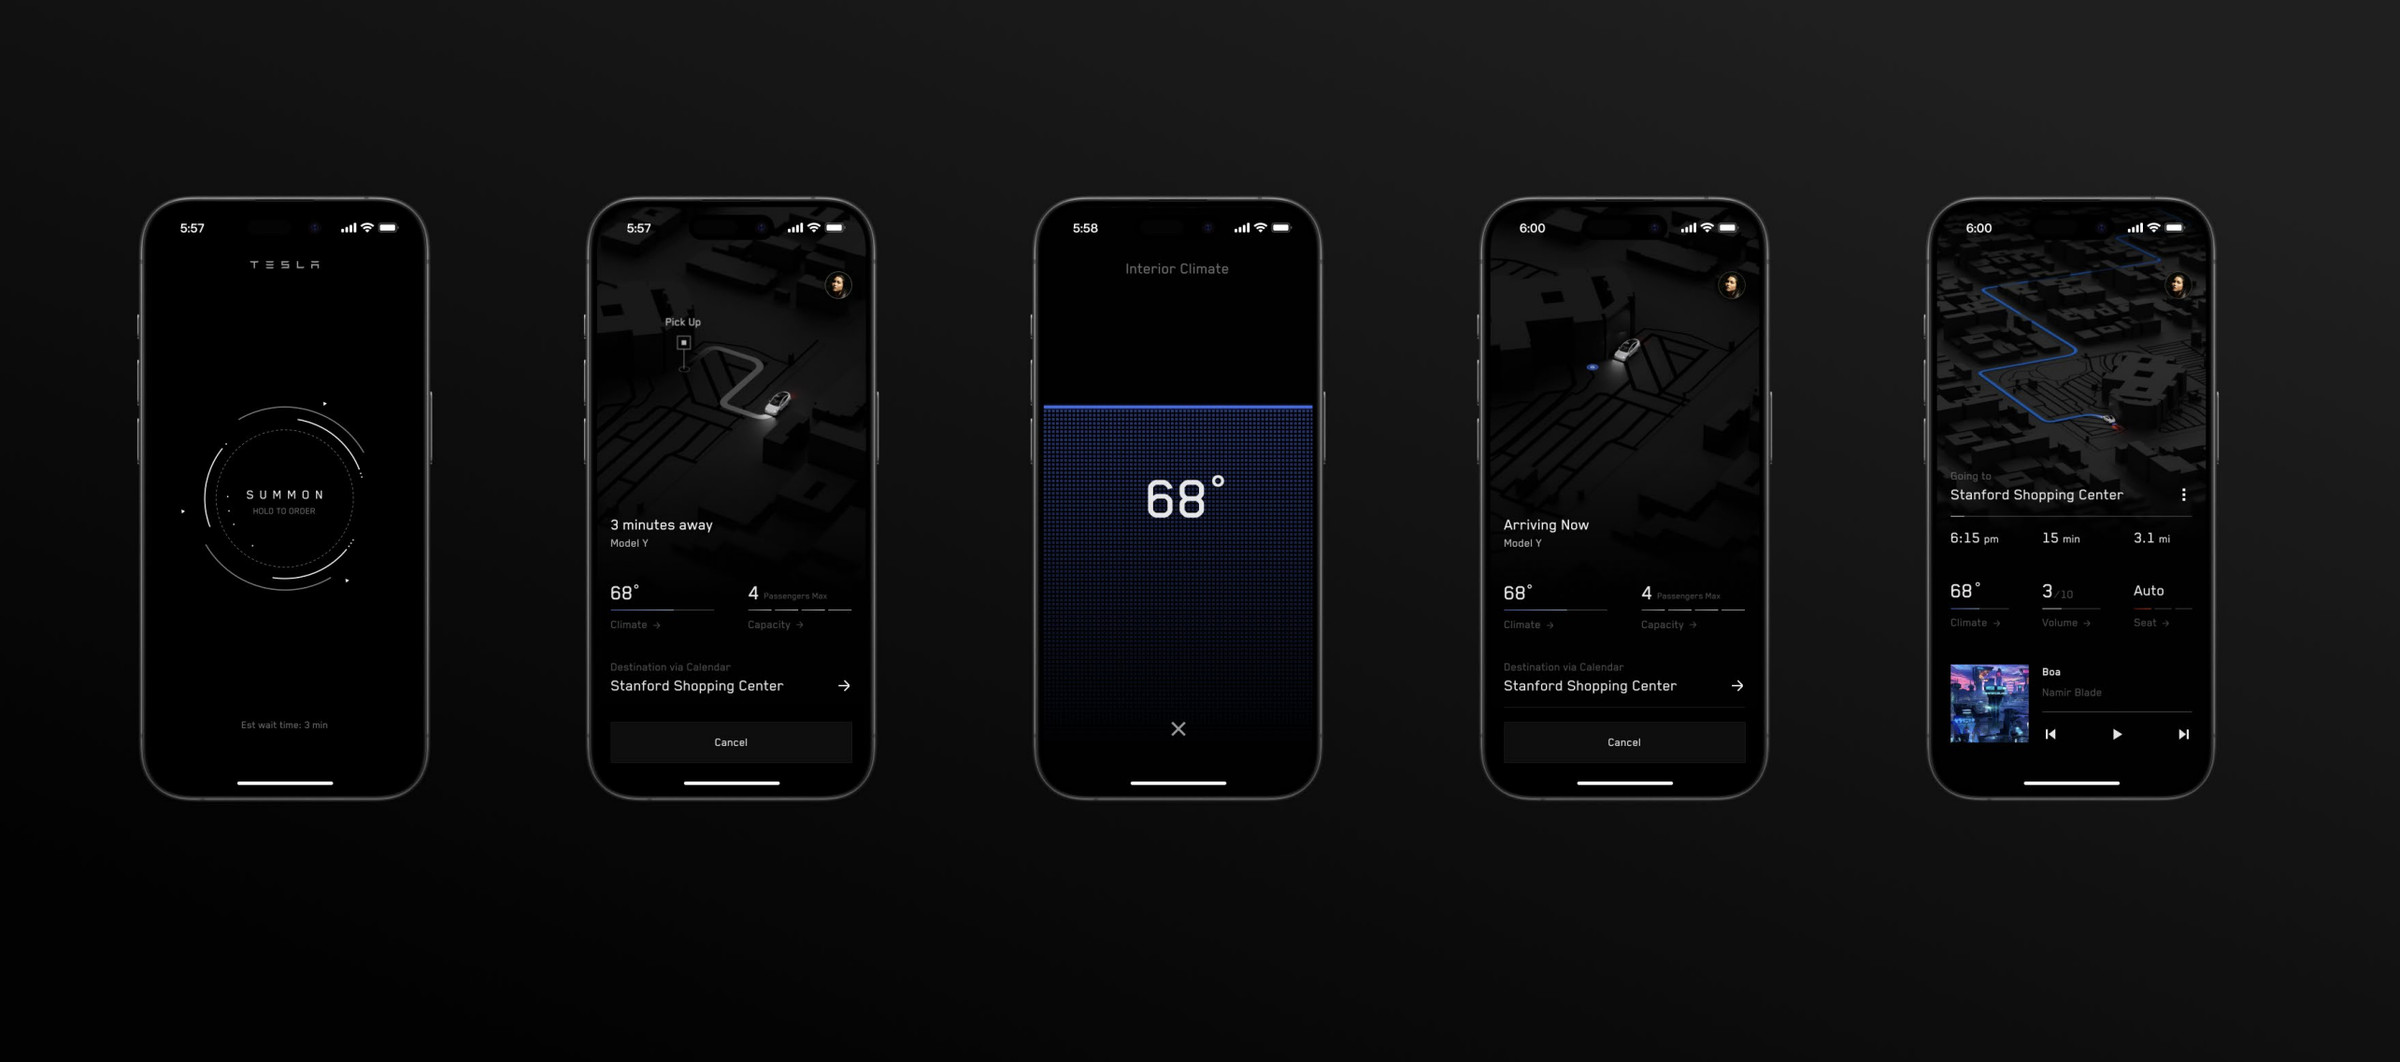 Tesla’s ridehailing app looks like your average ridehailing app. 